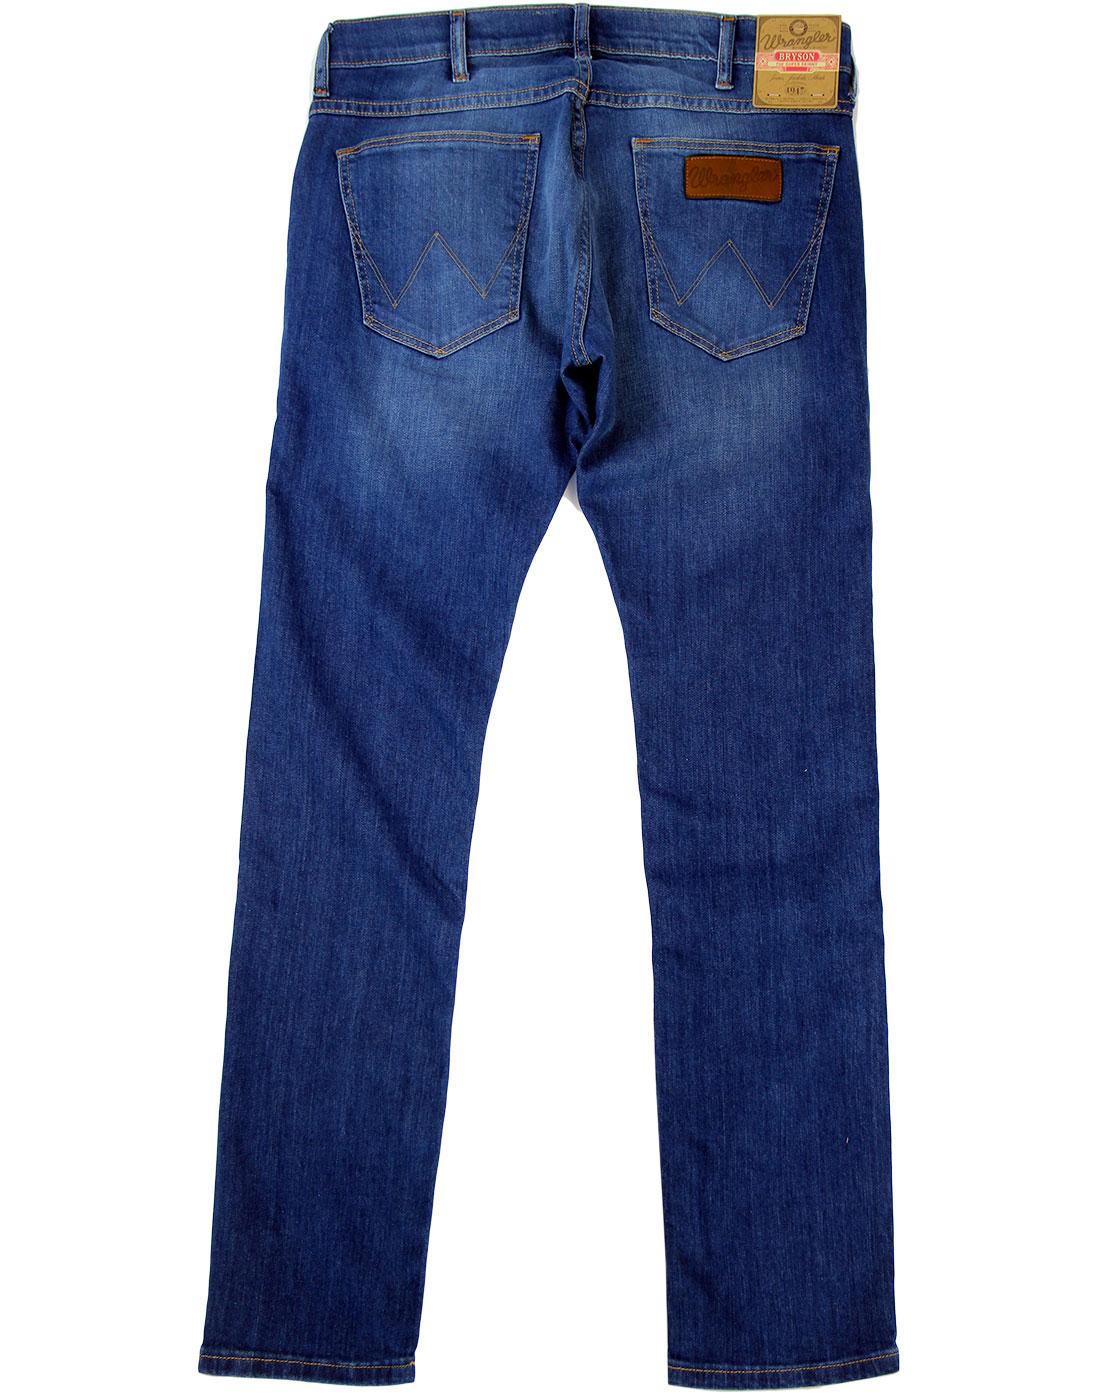 WRANGLER Bryson Blue Bream Super Skinny Retro Mod Denim Jeans